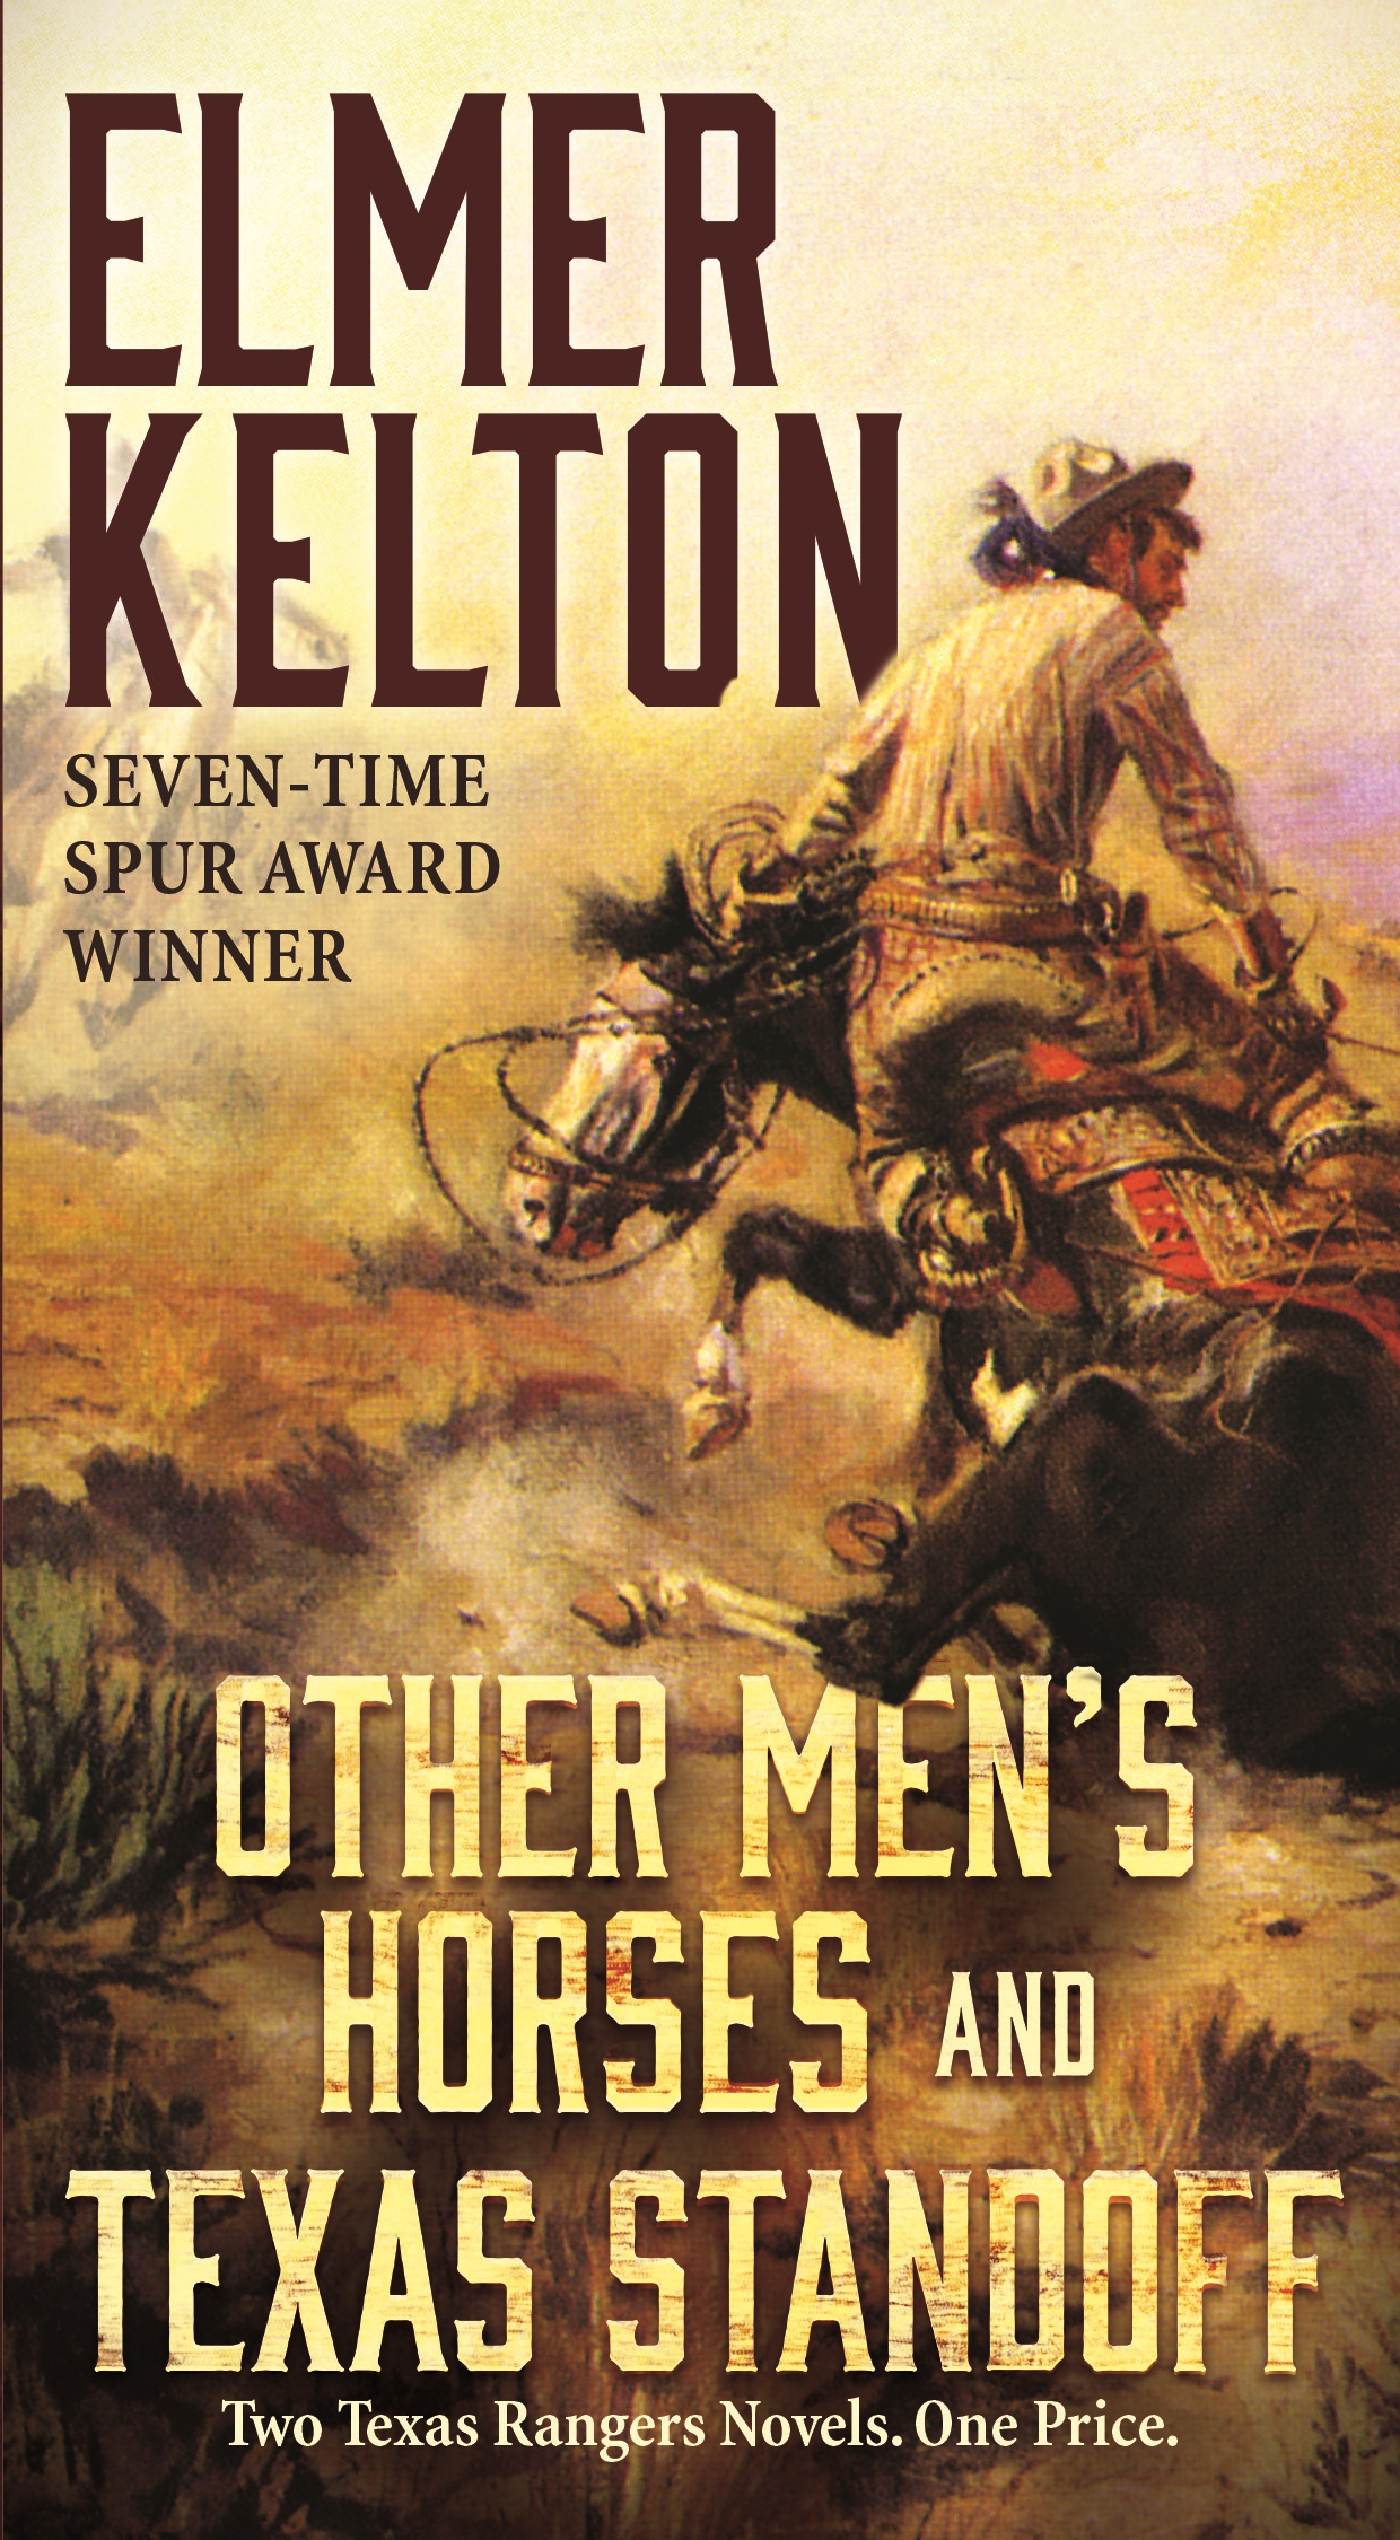 Other Men's Horses and Texas Standoff : Two Texas Rangers Novels by Elmer Kelton